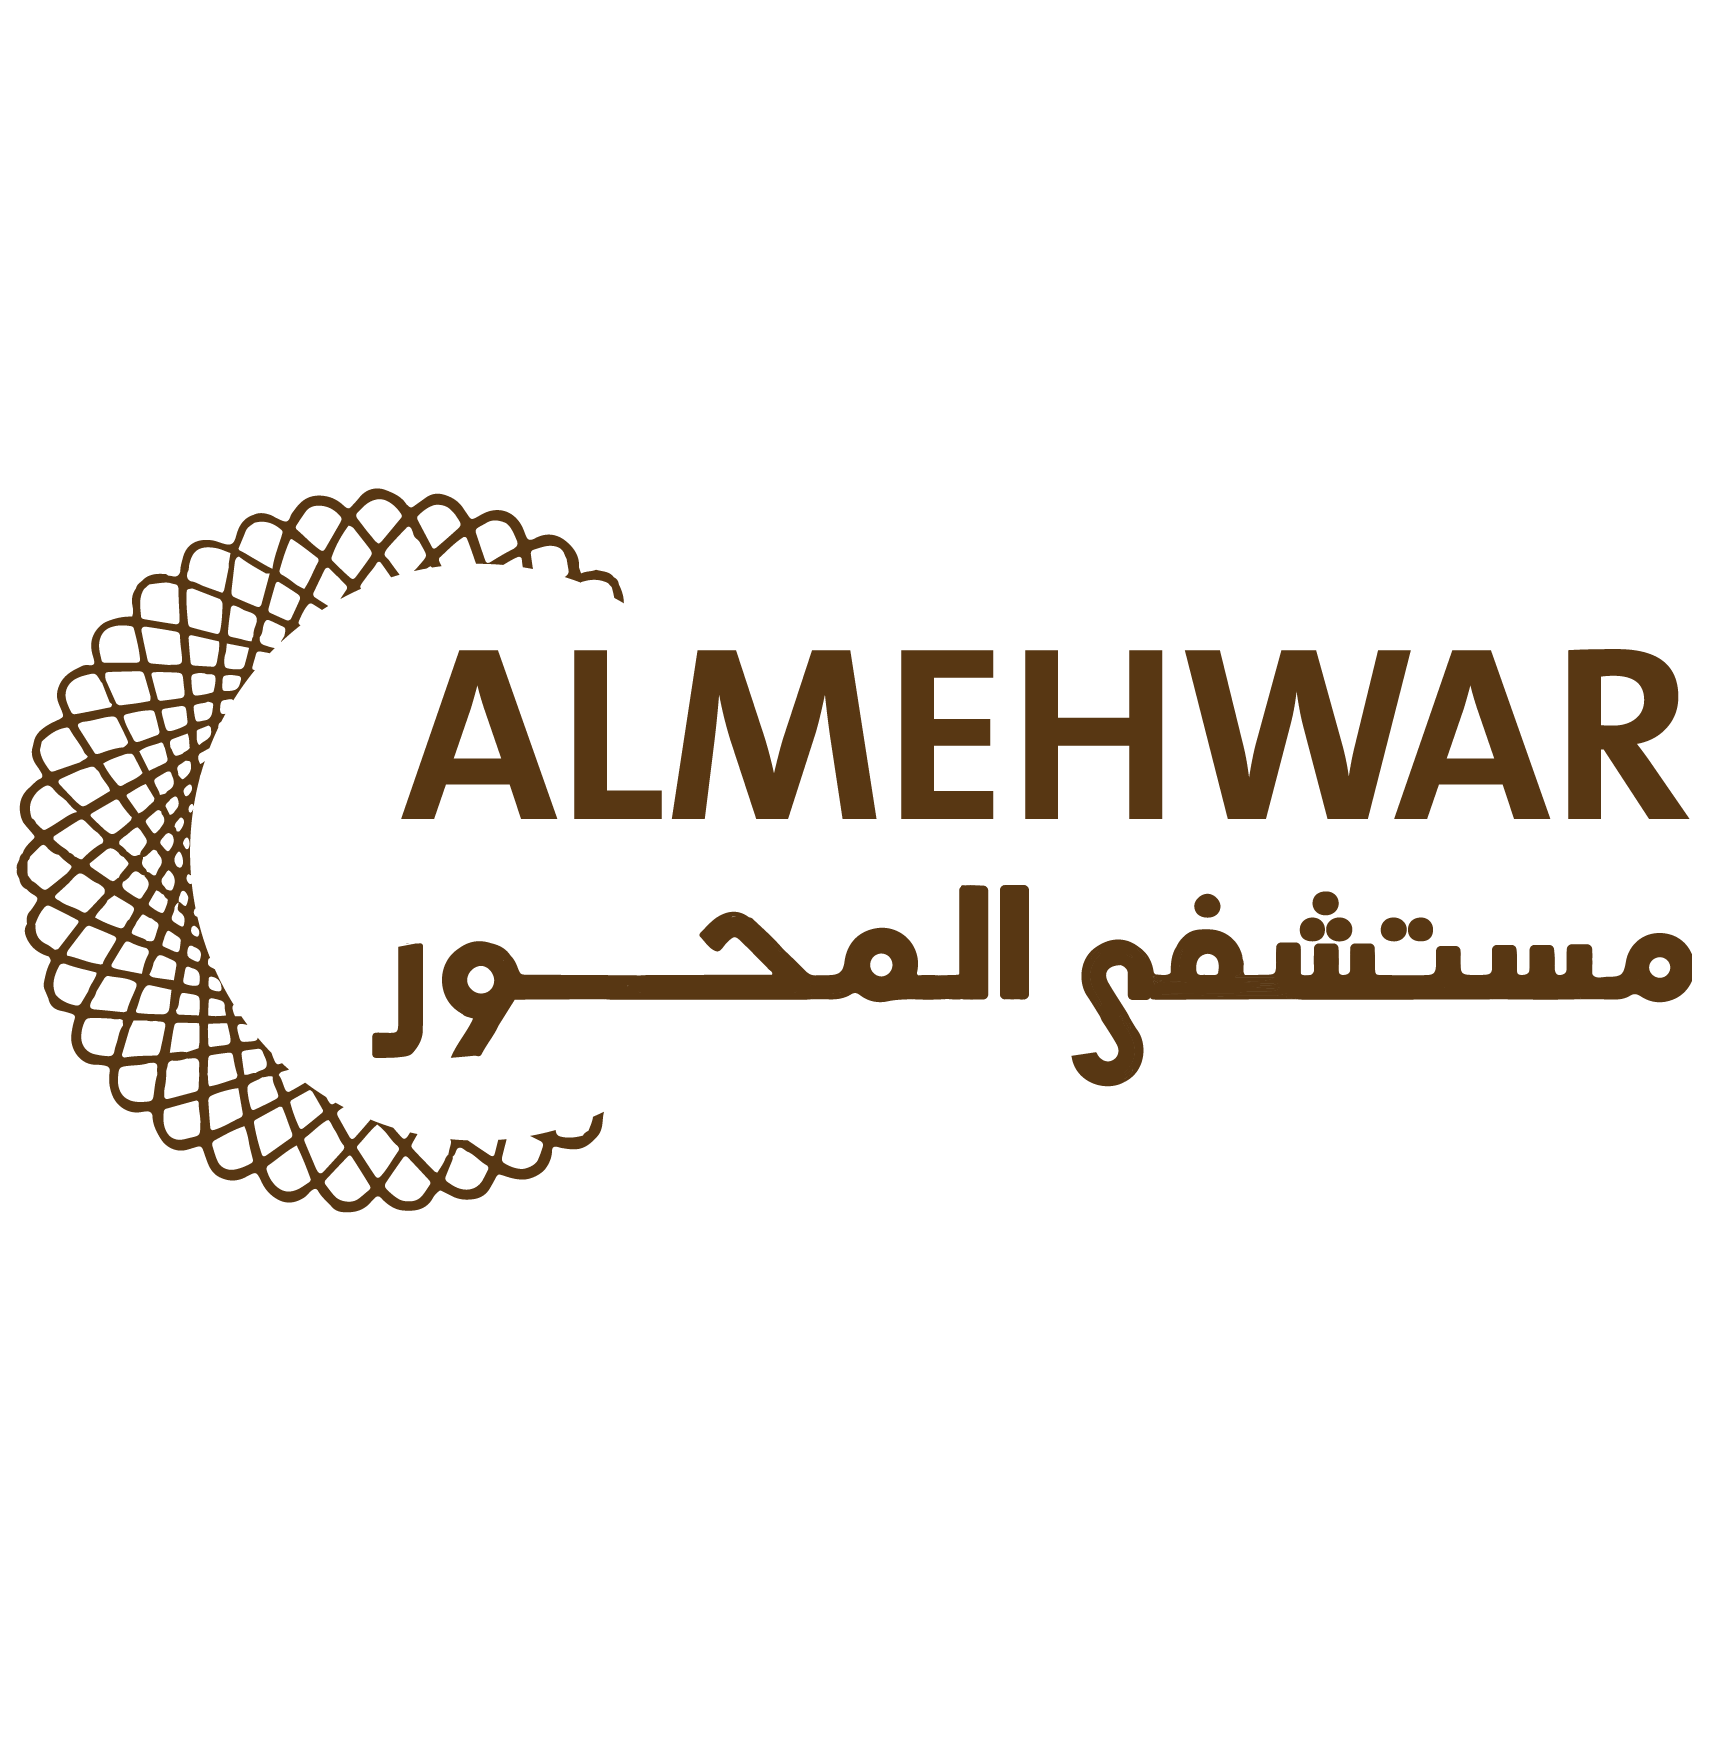 AlMehwar Hospital